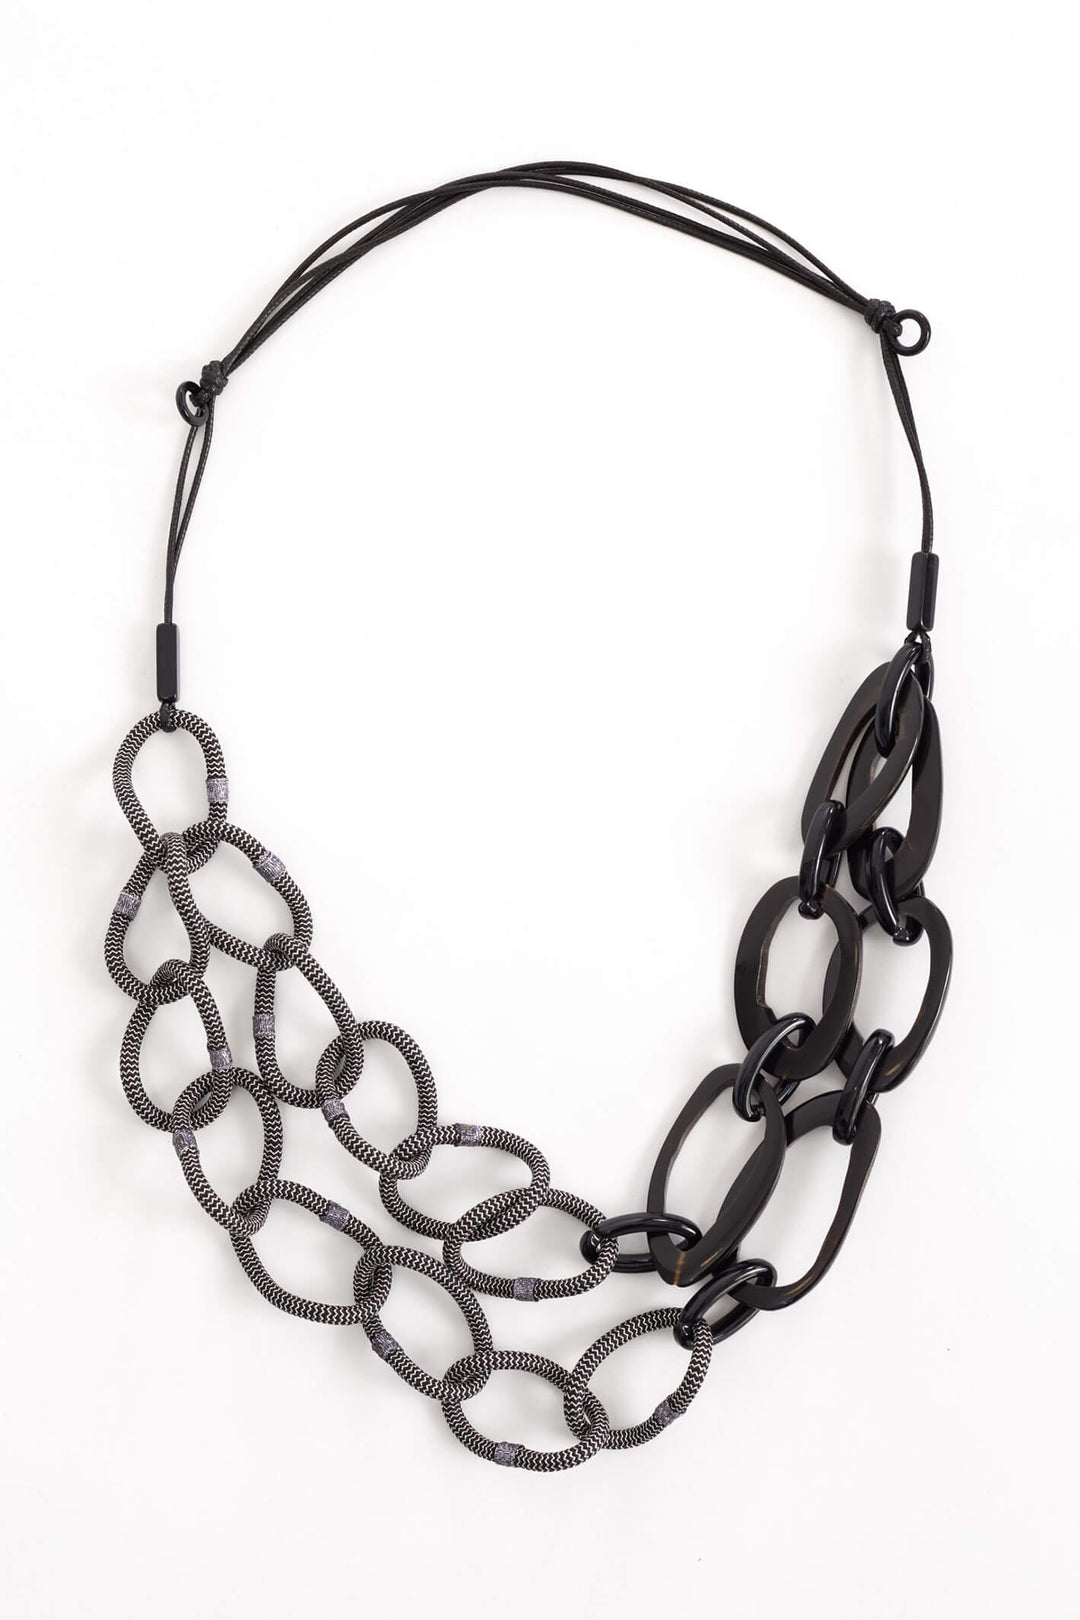 Naya NAW23271 Black Silver Necklace - Olivia Grace Fashion